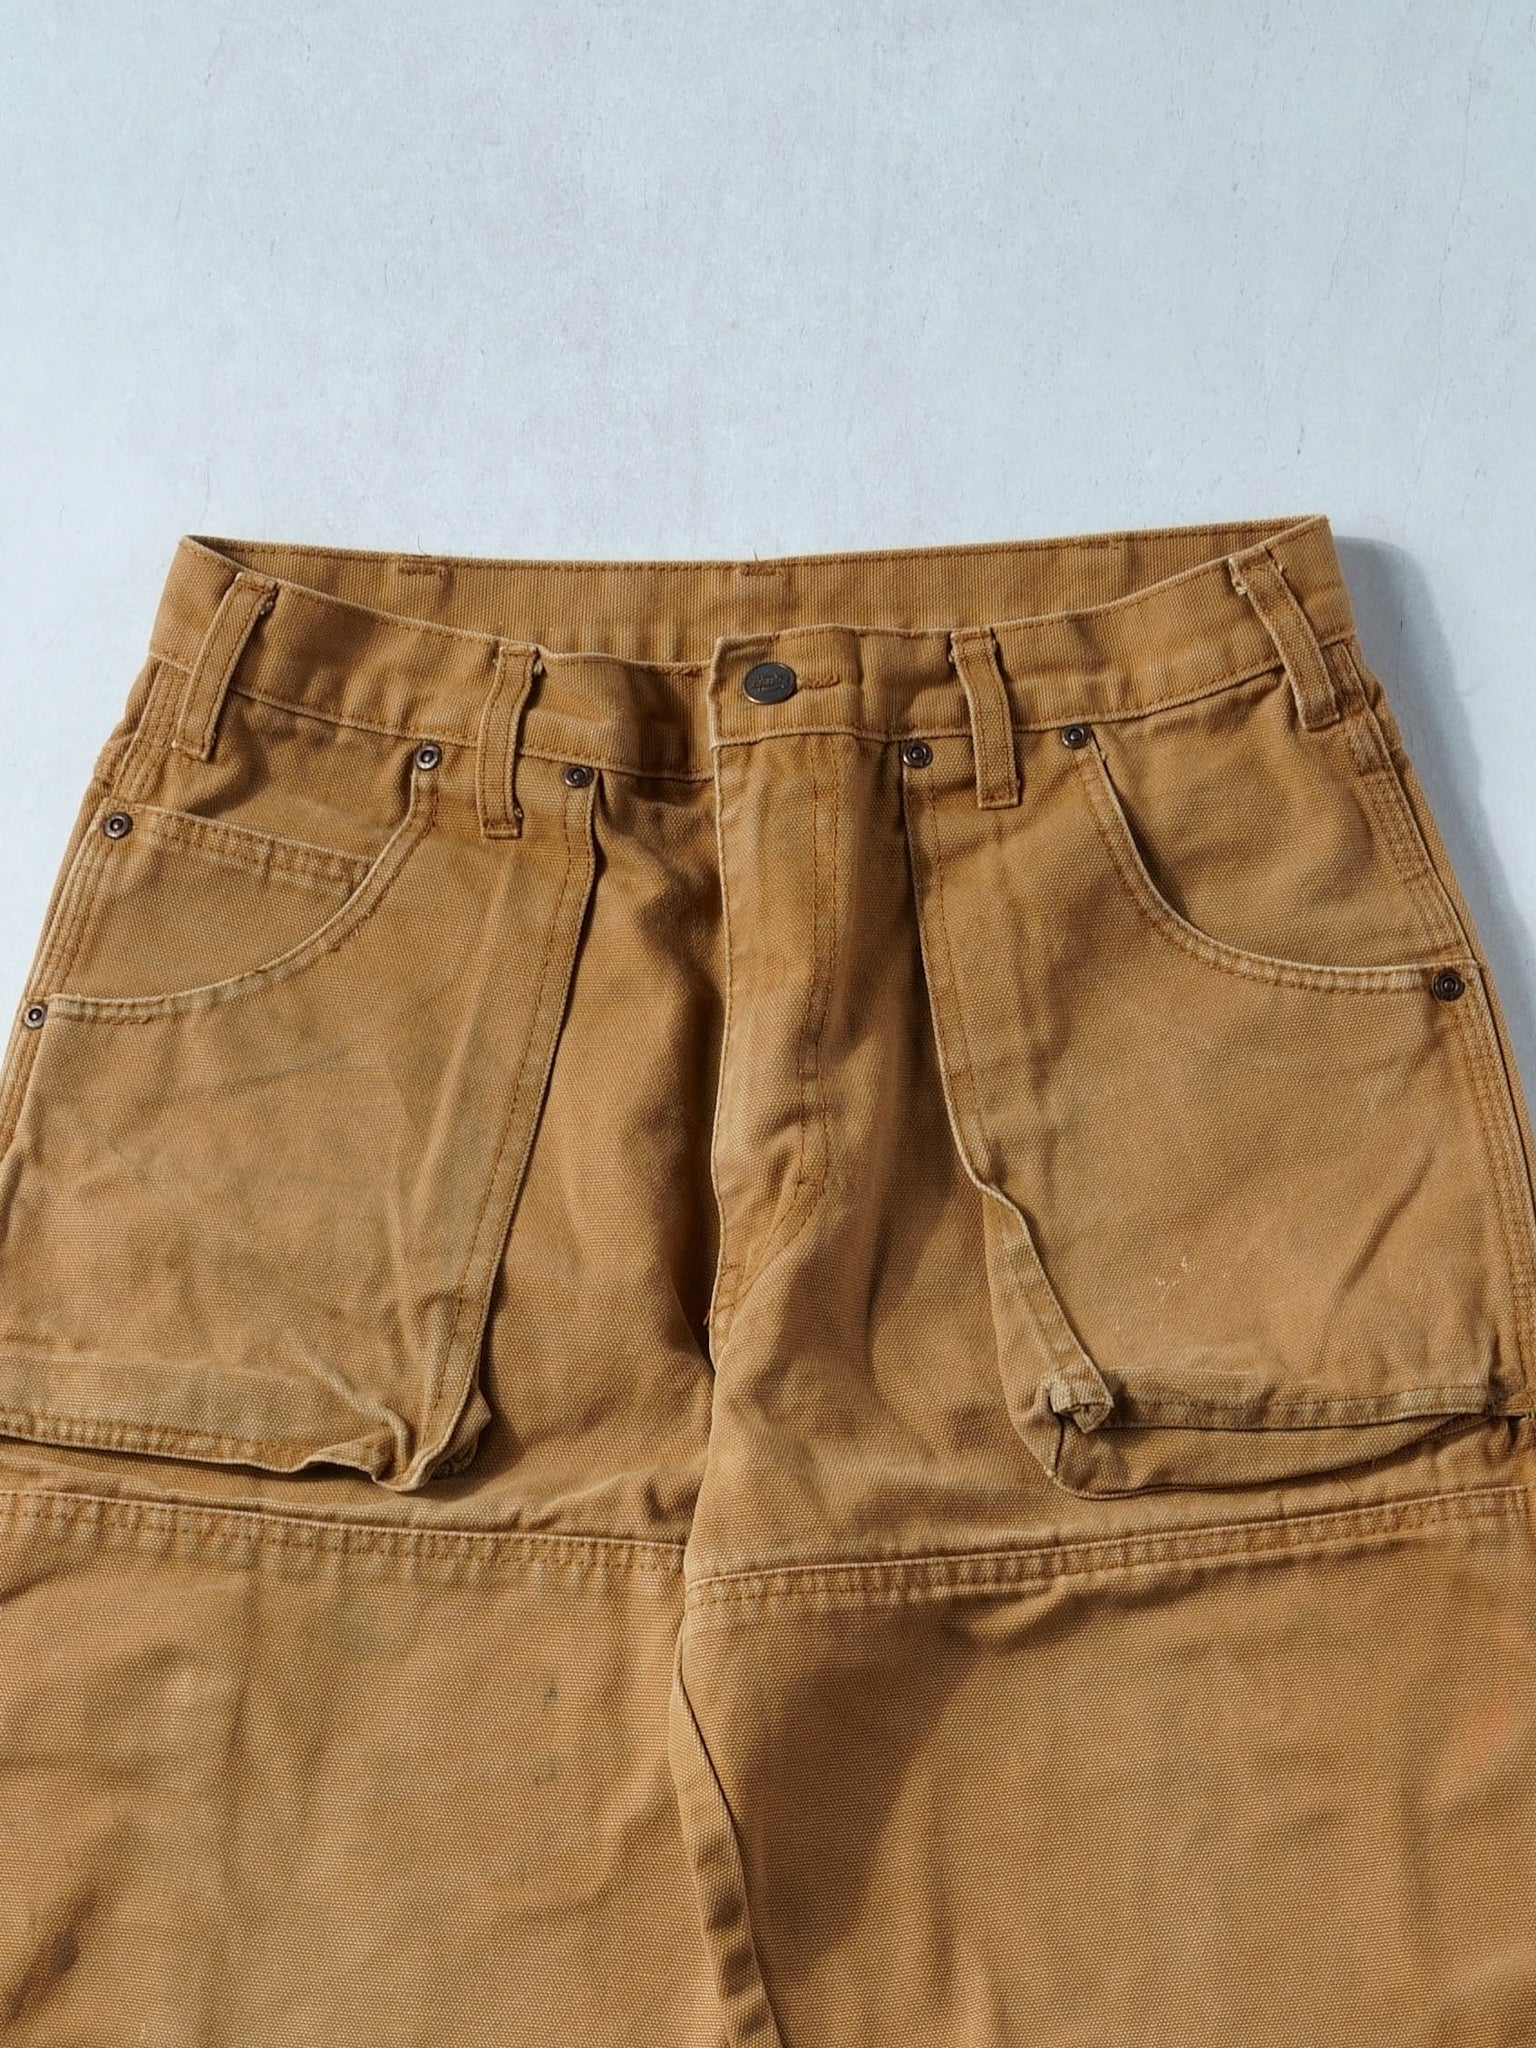 Vintage 90s Khaki Dickies Double Knee Carpenter Pants (32x31)